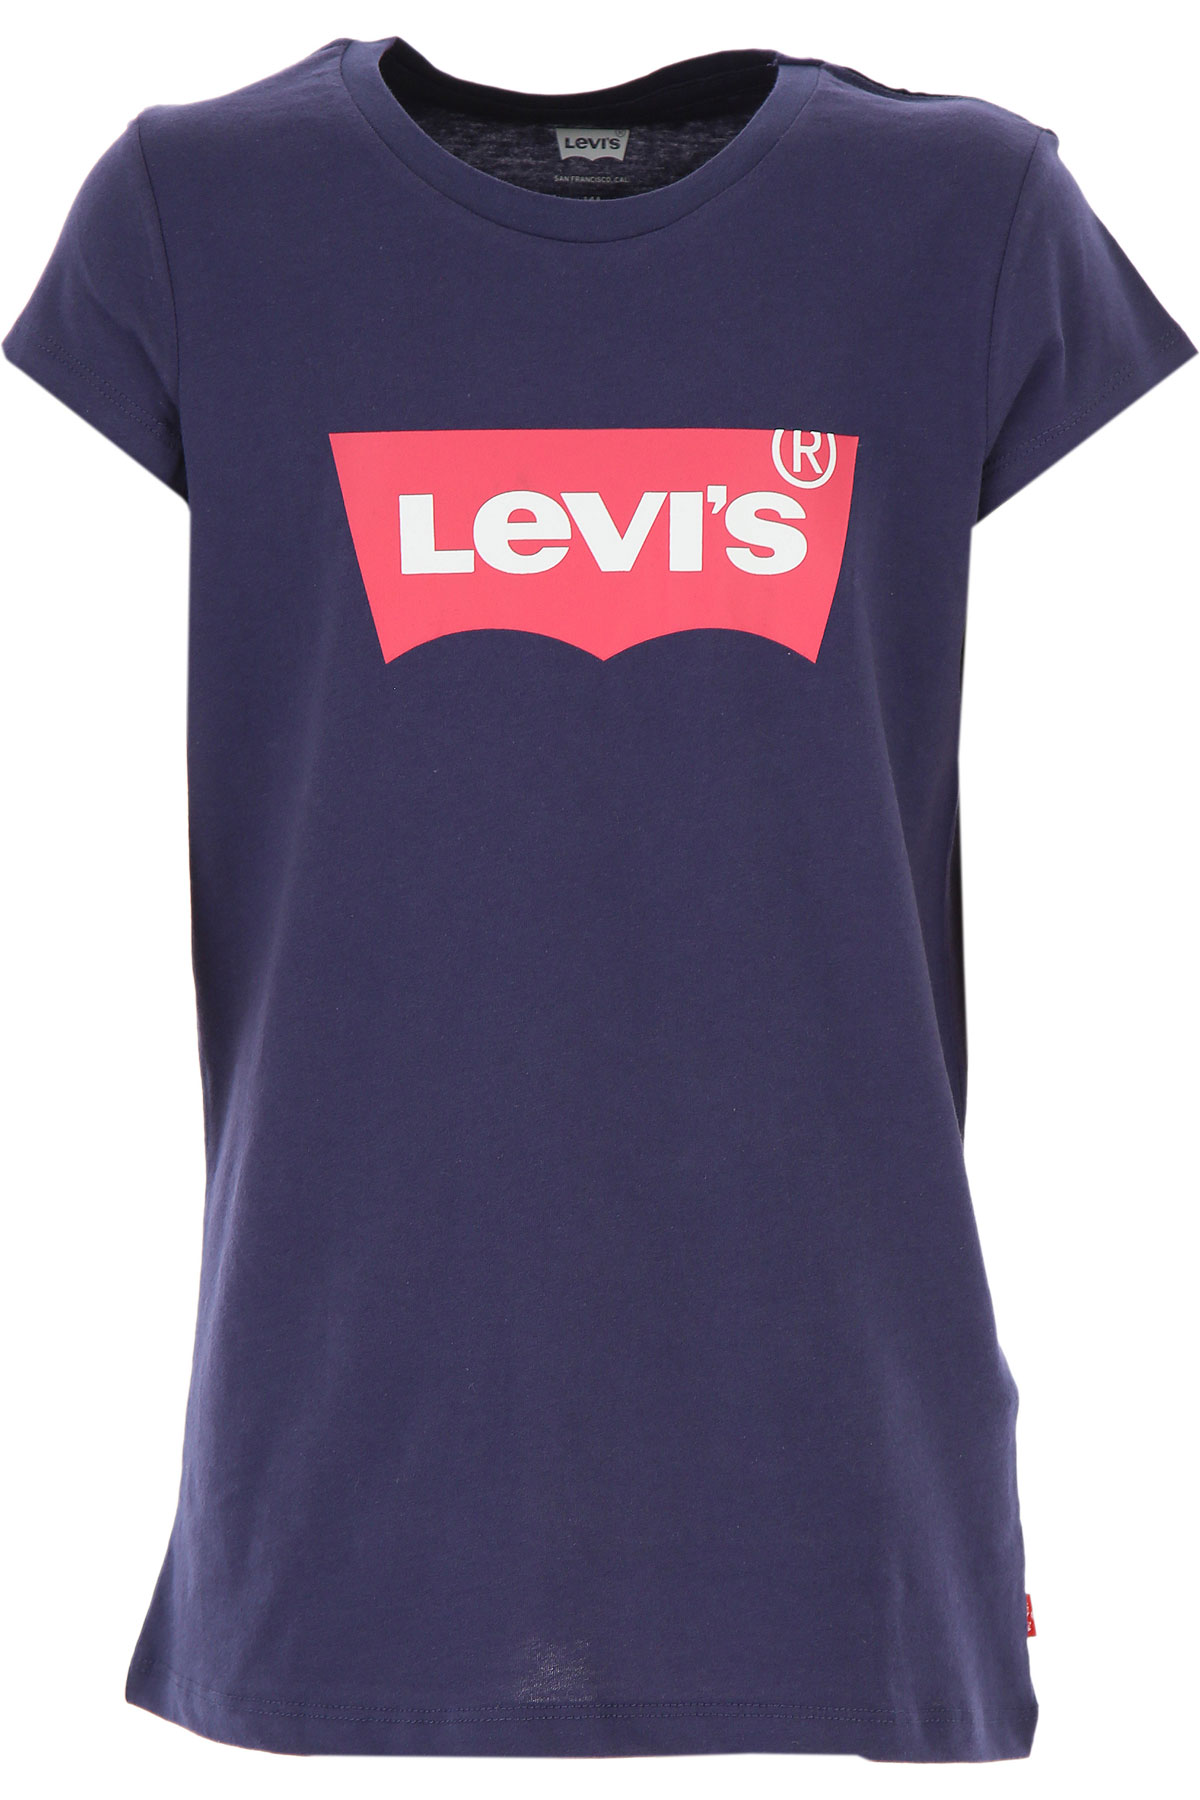 Levis Kinder T-Shirt für Mädchen Günstig im Sale, Marine blau, Baumwolle, 2017, 10Y 12Y 14Y 16Y 8Y